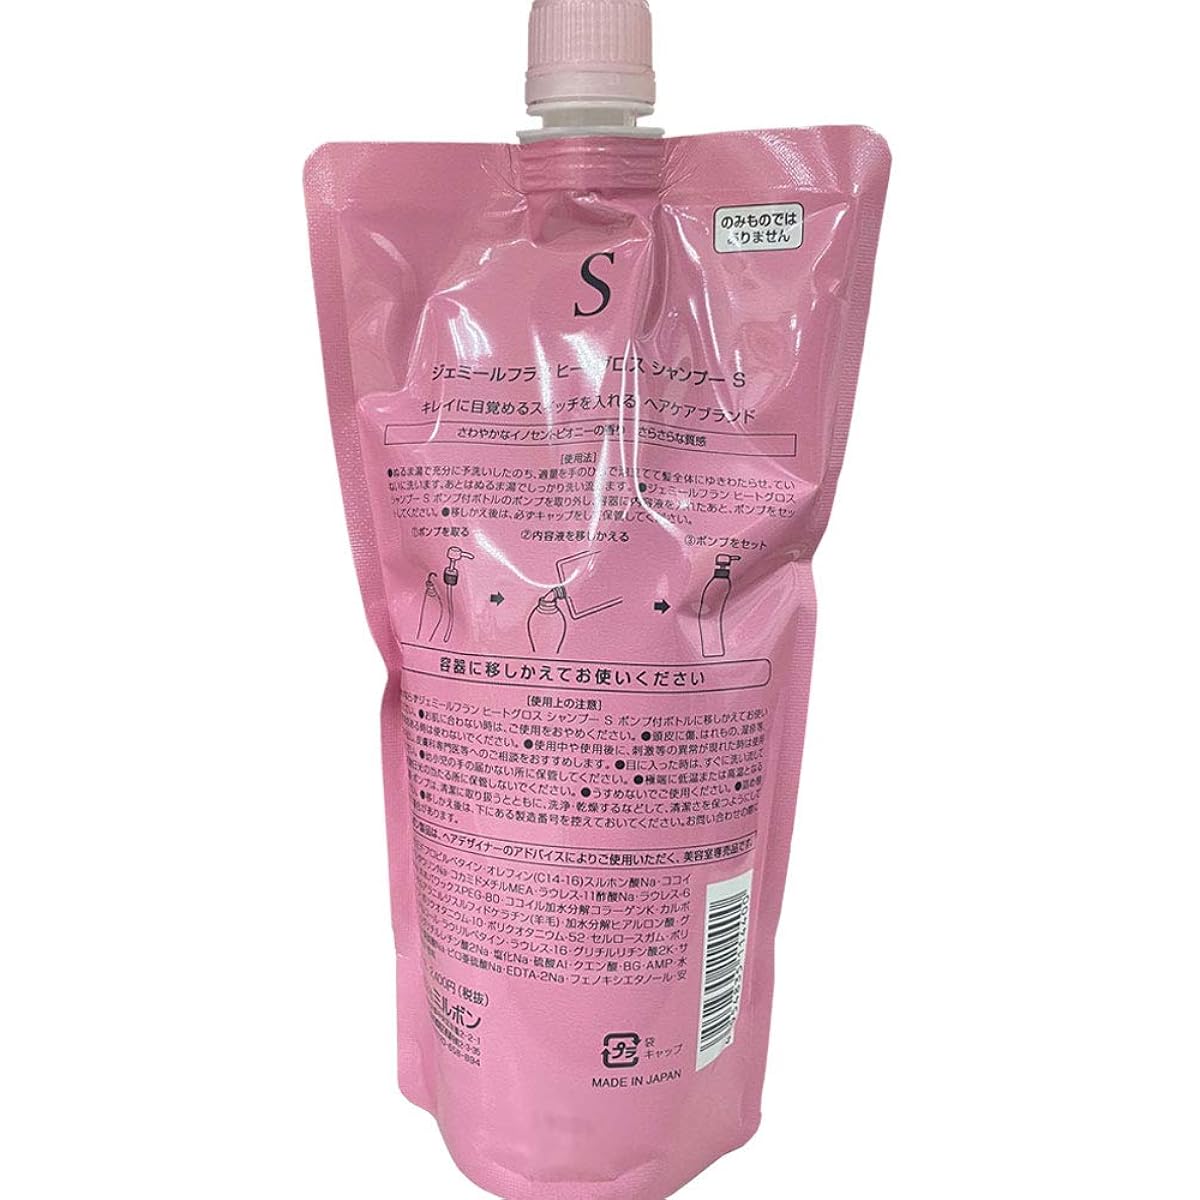 Milbon MILBON Gemile Fran Heat Gloss Shampoo S 400mL [Refill] Shampoo